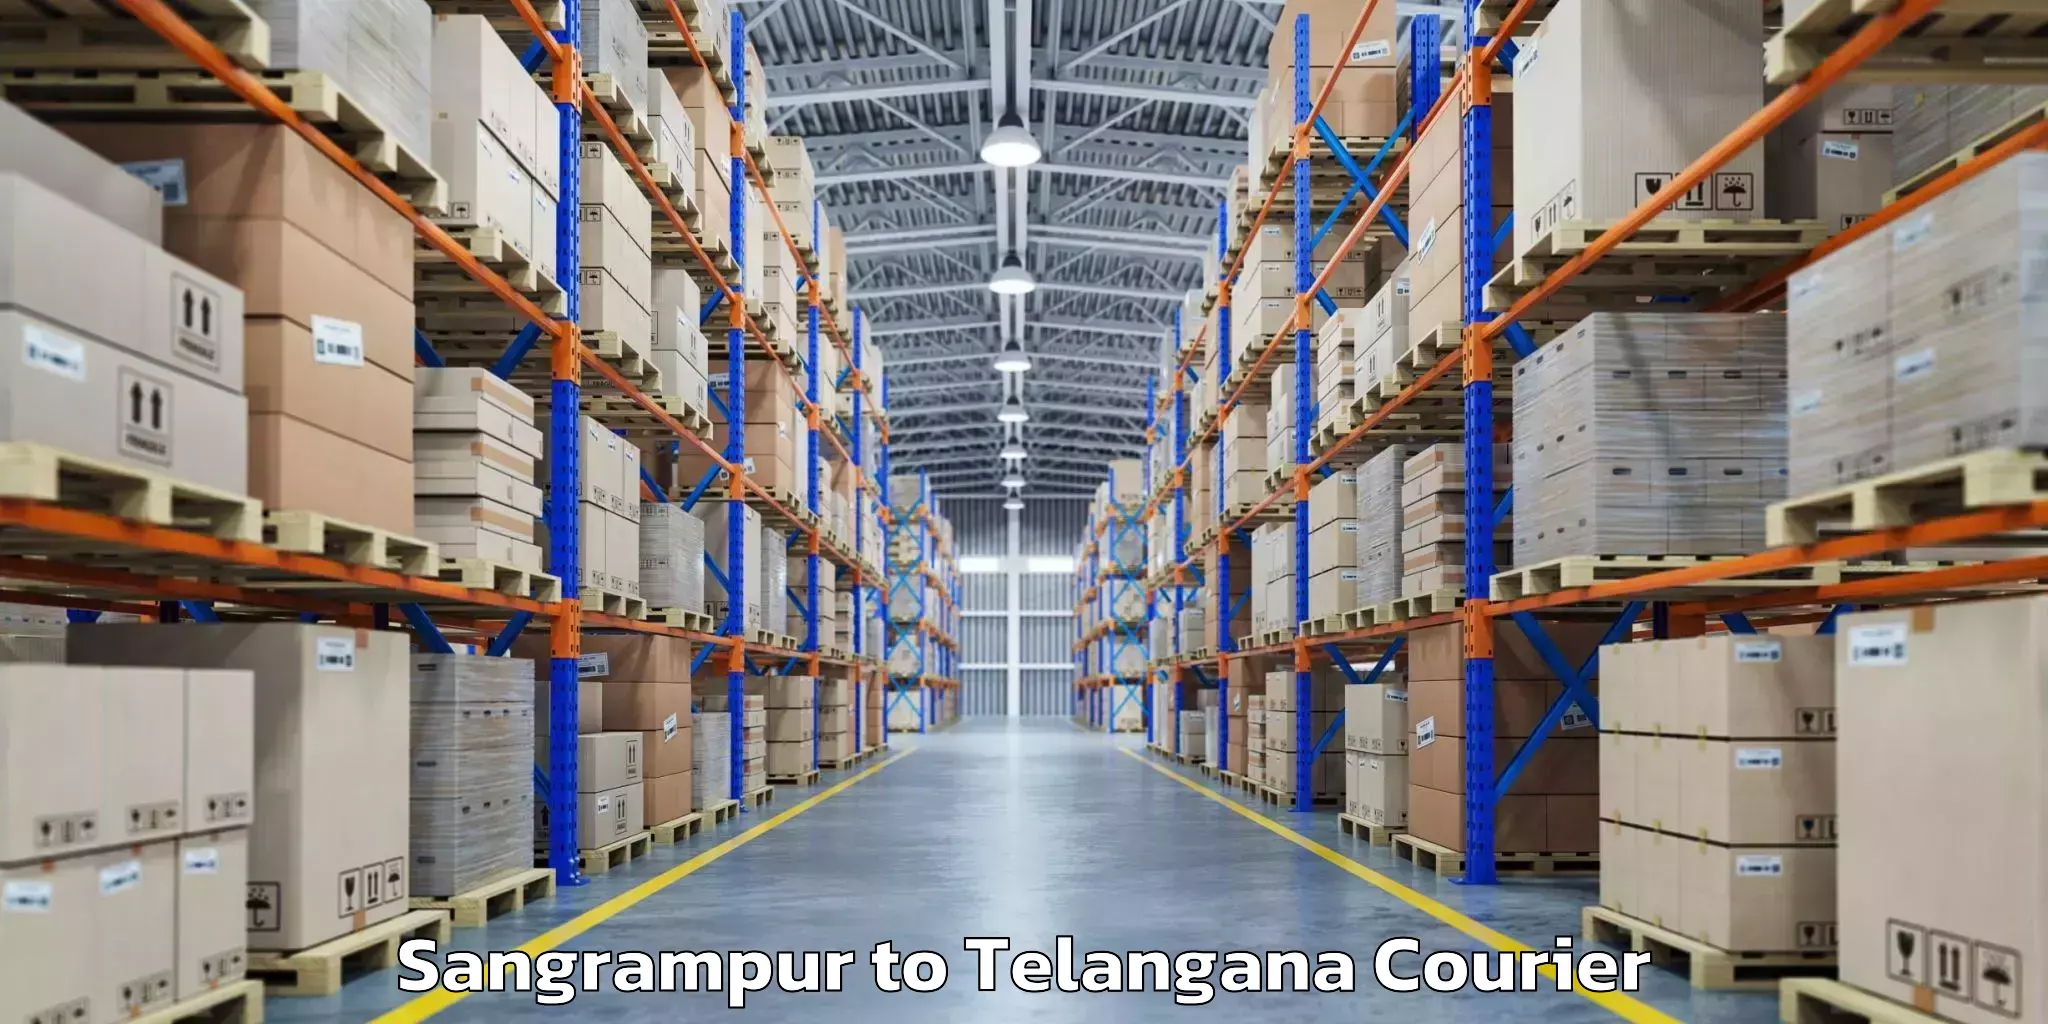 Baggage shipping calculator Sangrampur to Gollapalli